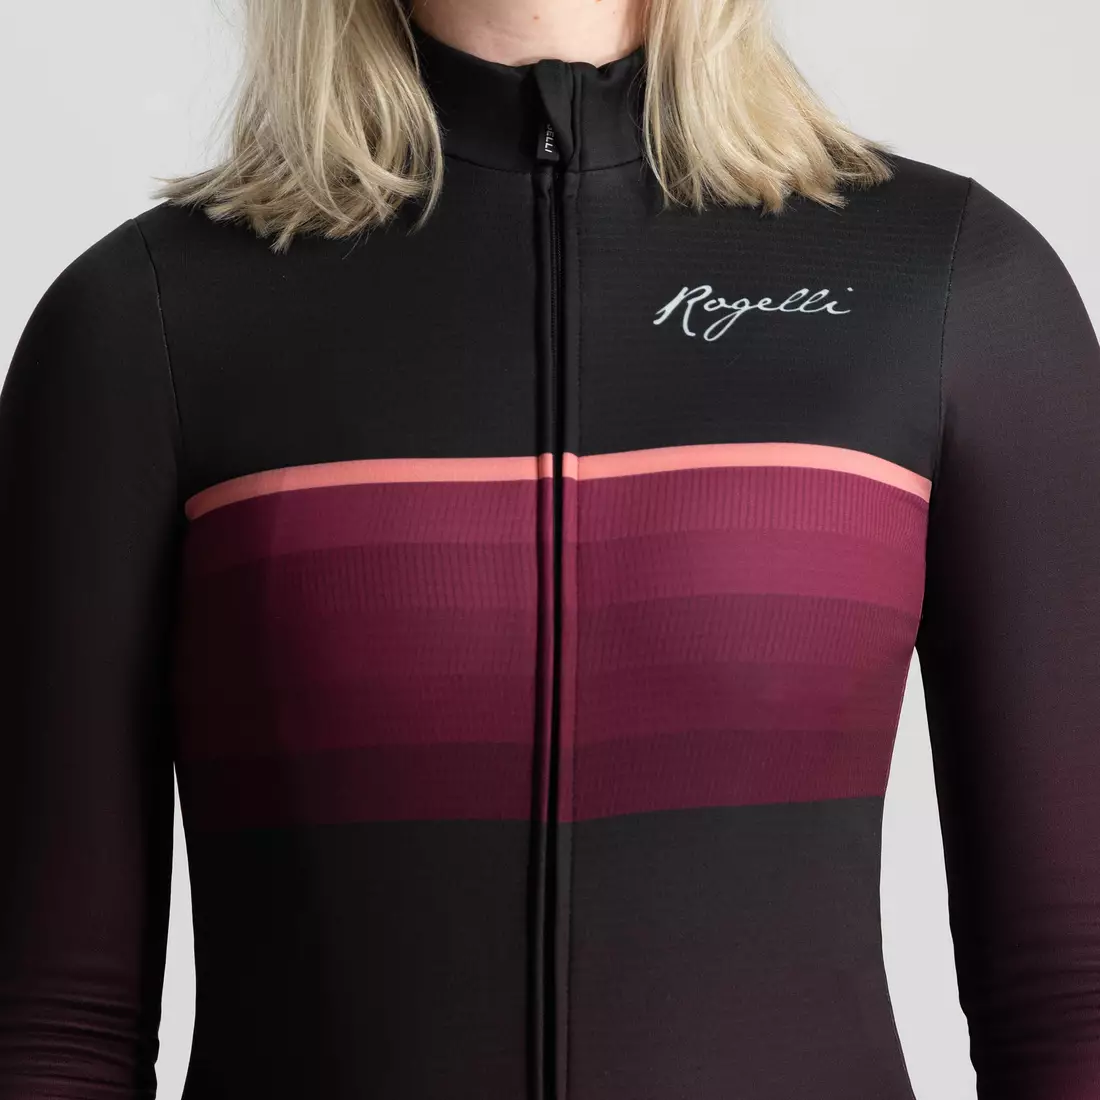 Rogelli women's cycling sweatshirt IMPRESS II, burgundy